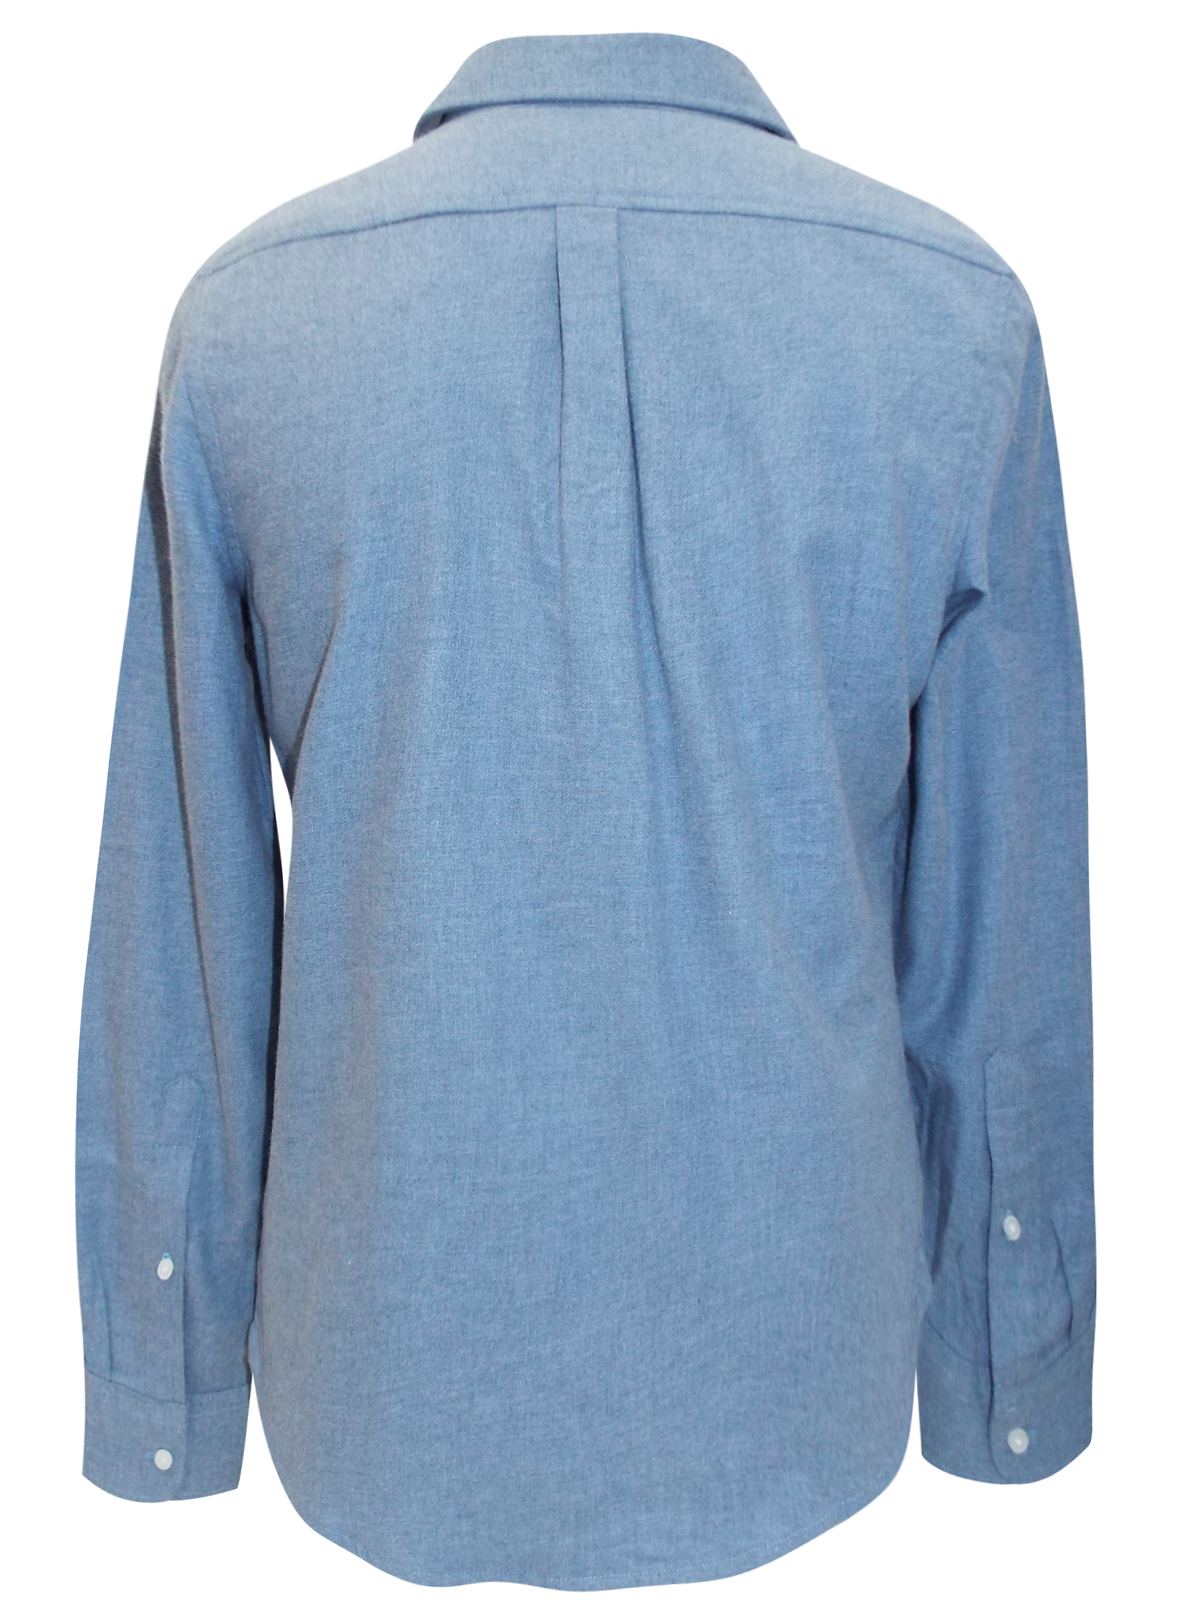 N3XT DENIM-BLUE Brushed Cotton Long Sleeve Shirt - Size Small to XXLarge